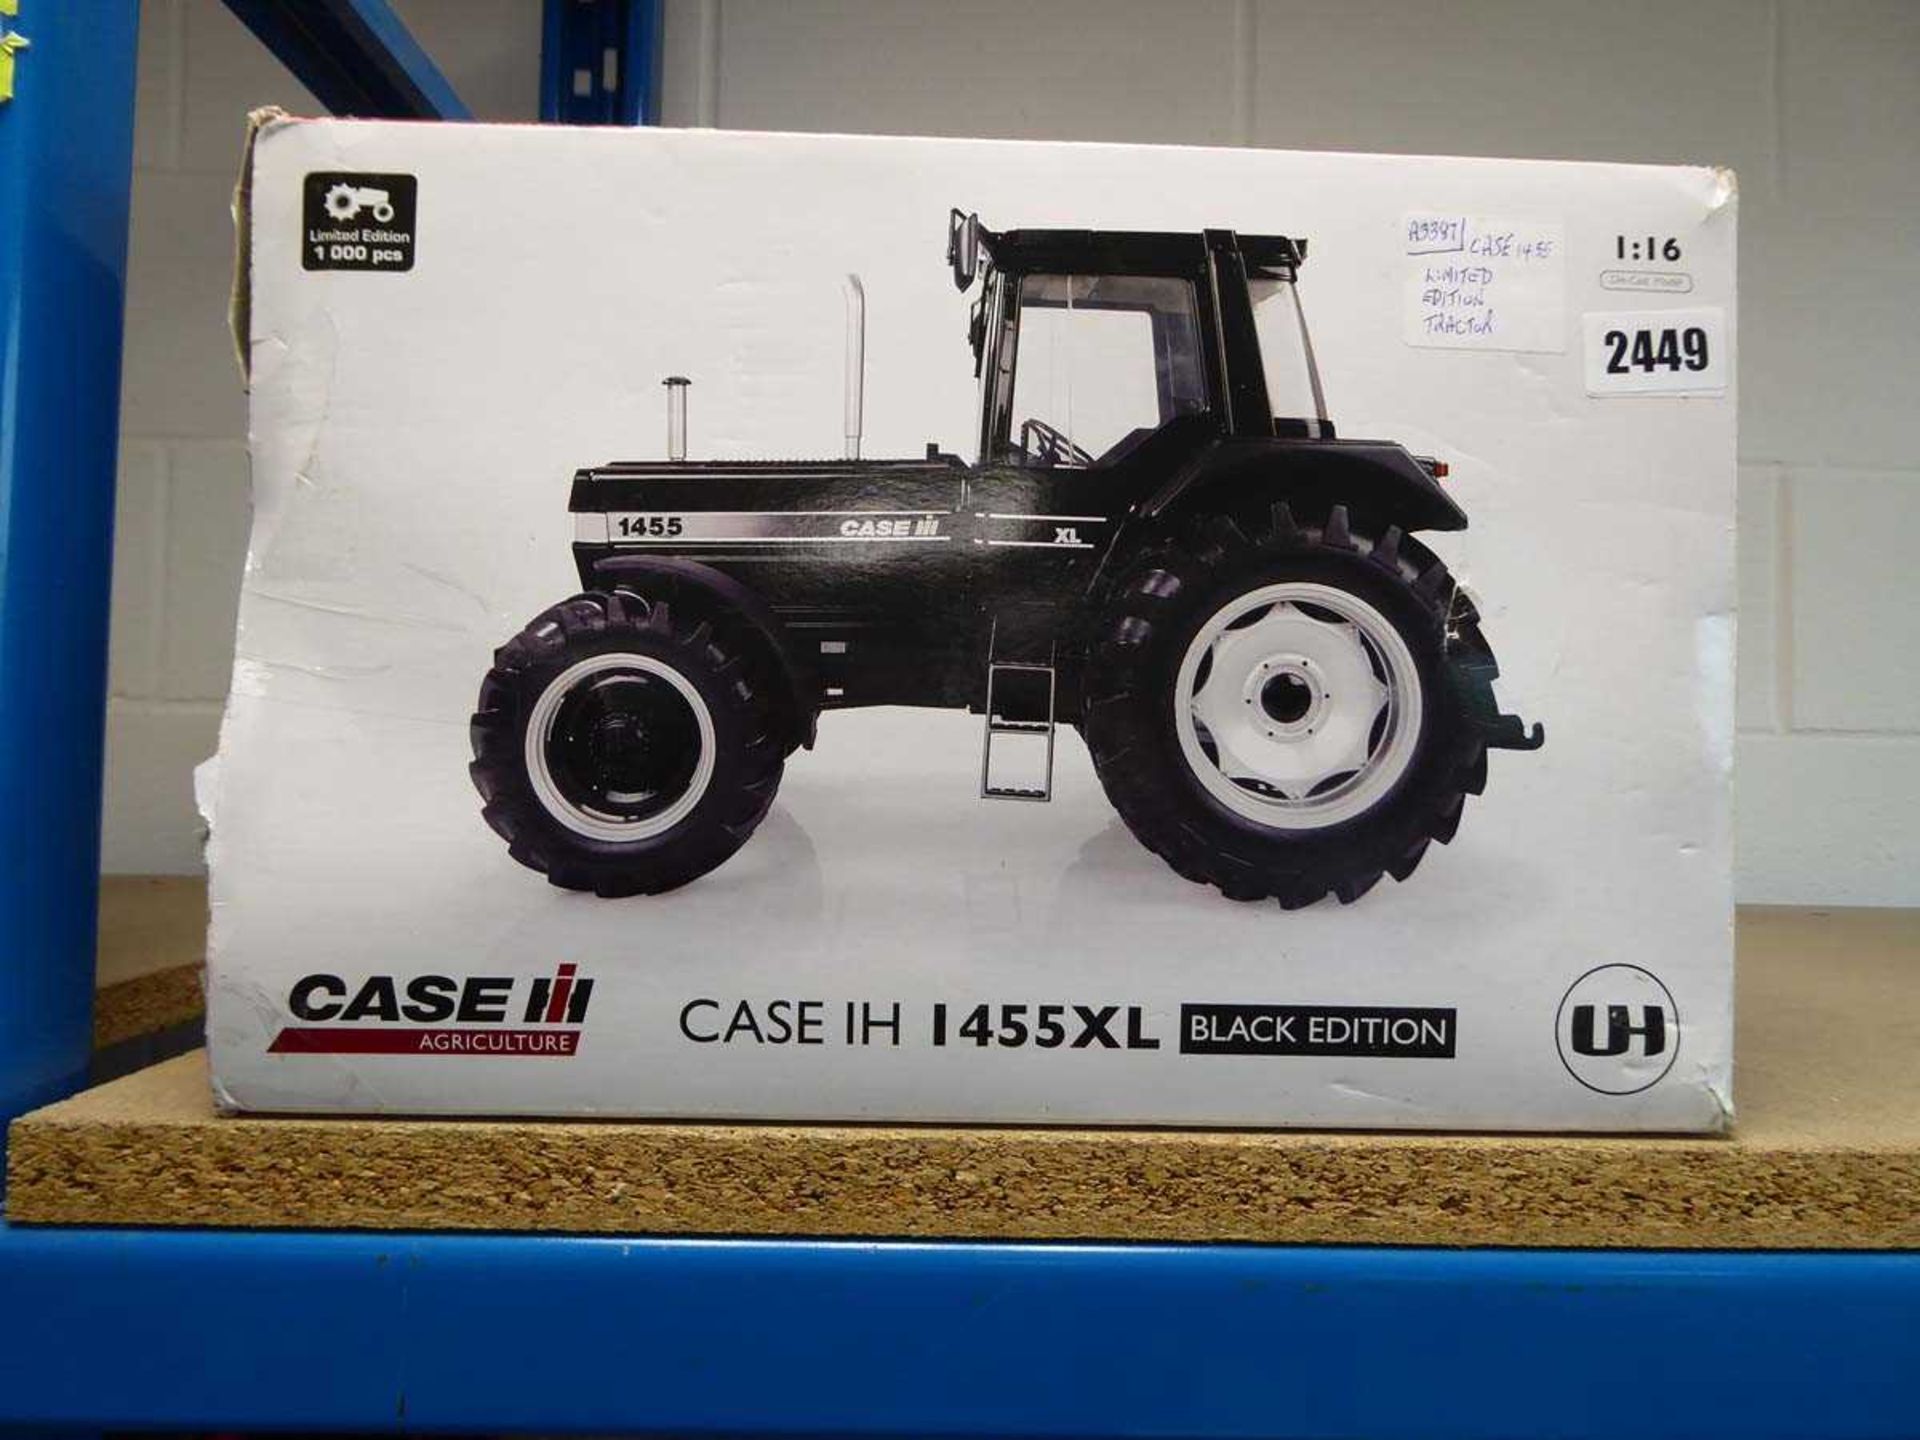 Case 1455 Ltd. Ed. tractor model in box